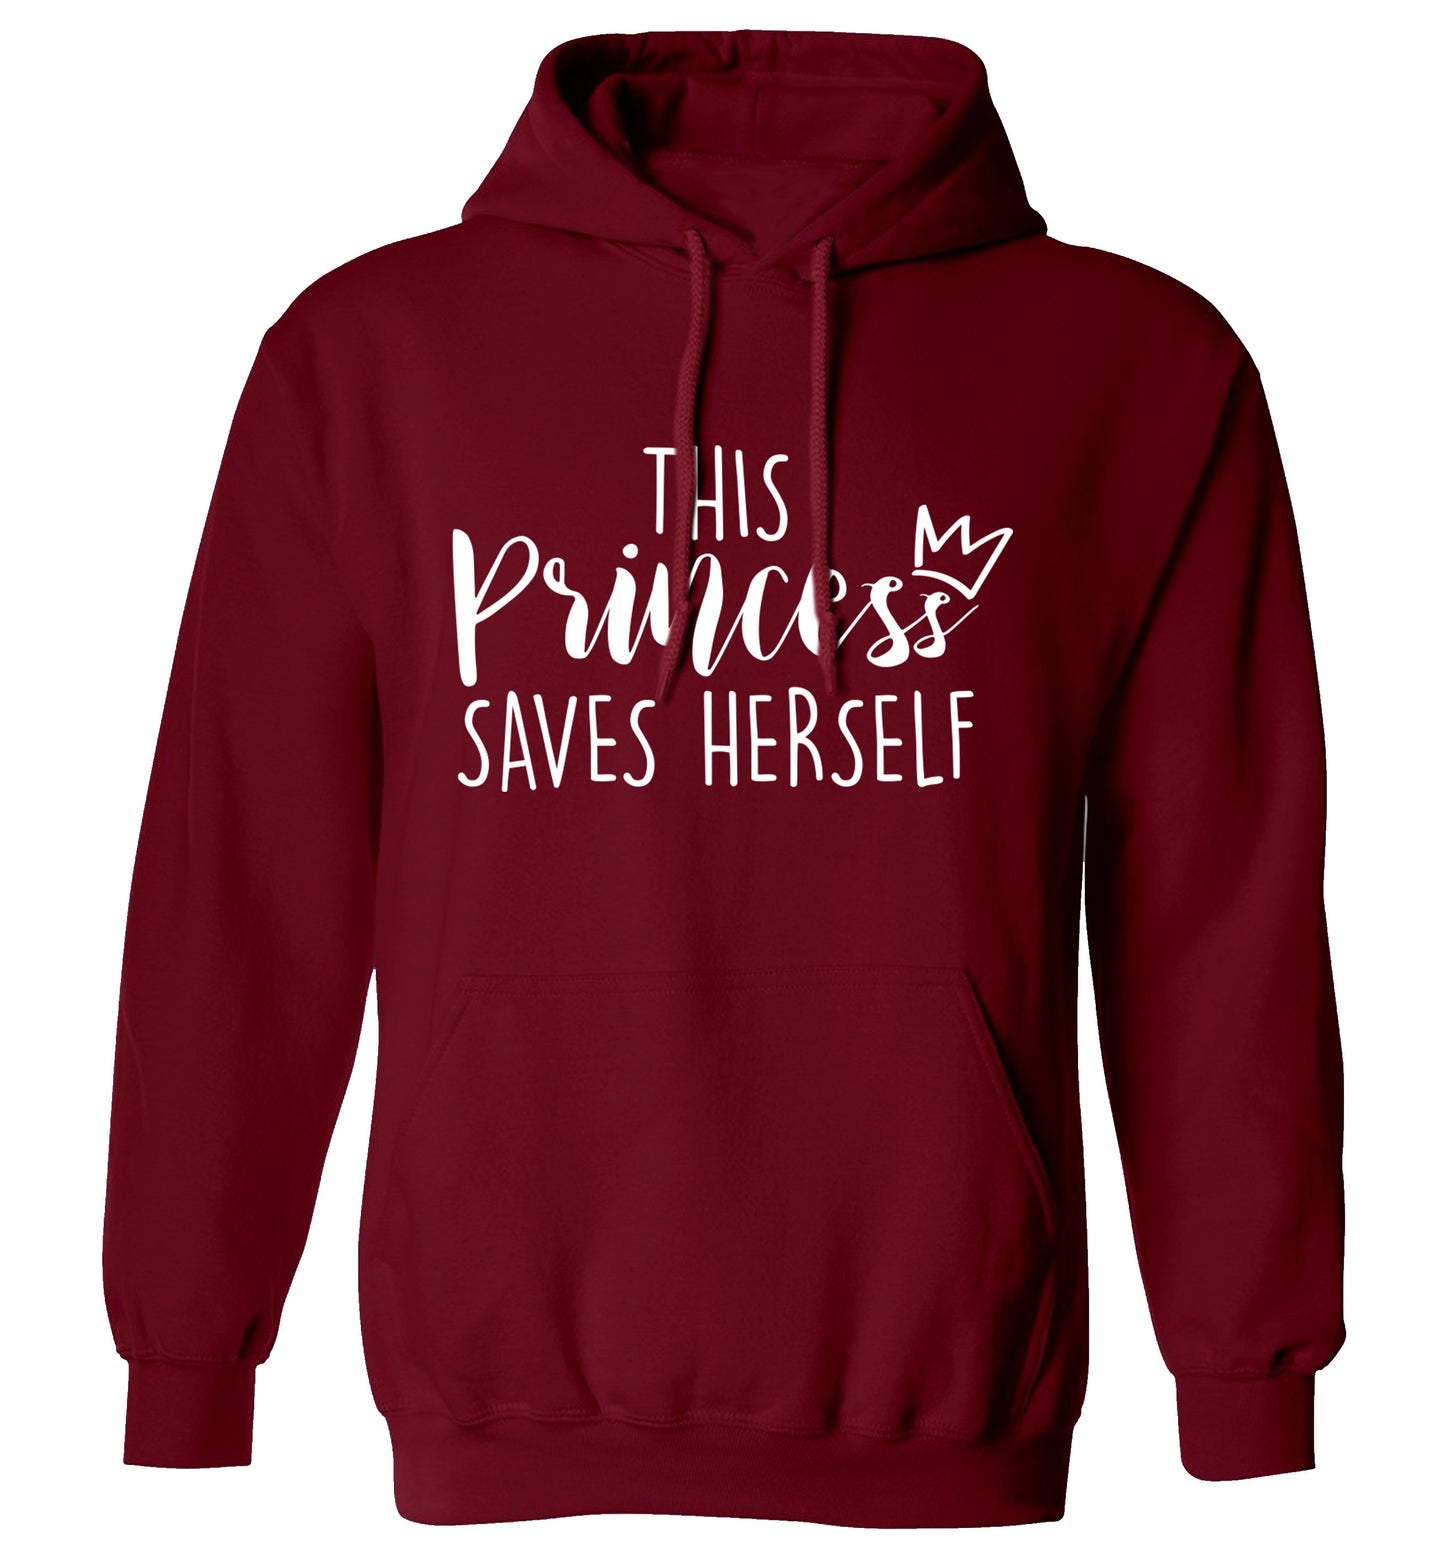 This princess saves herself adults unisex maroon hoodie 2XL